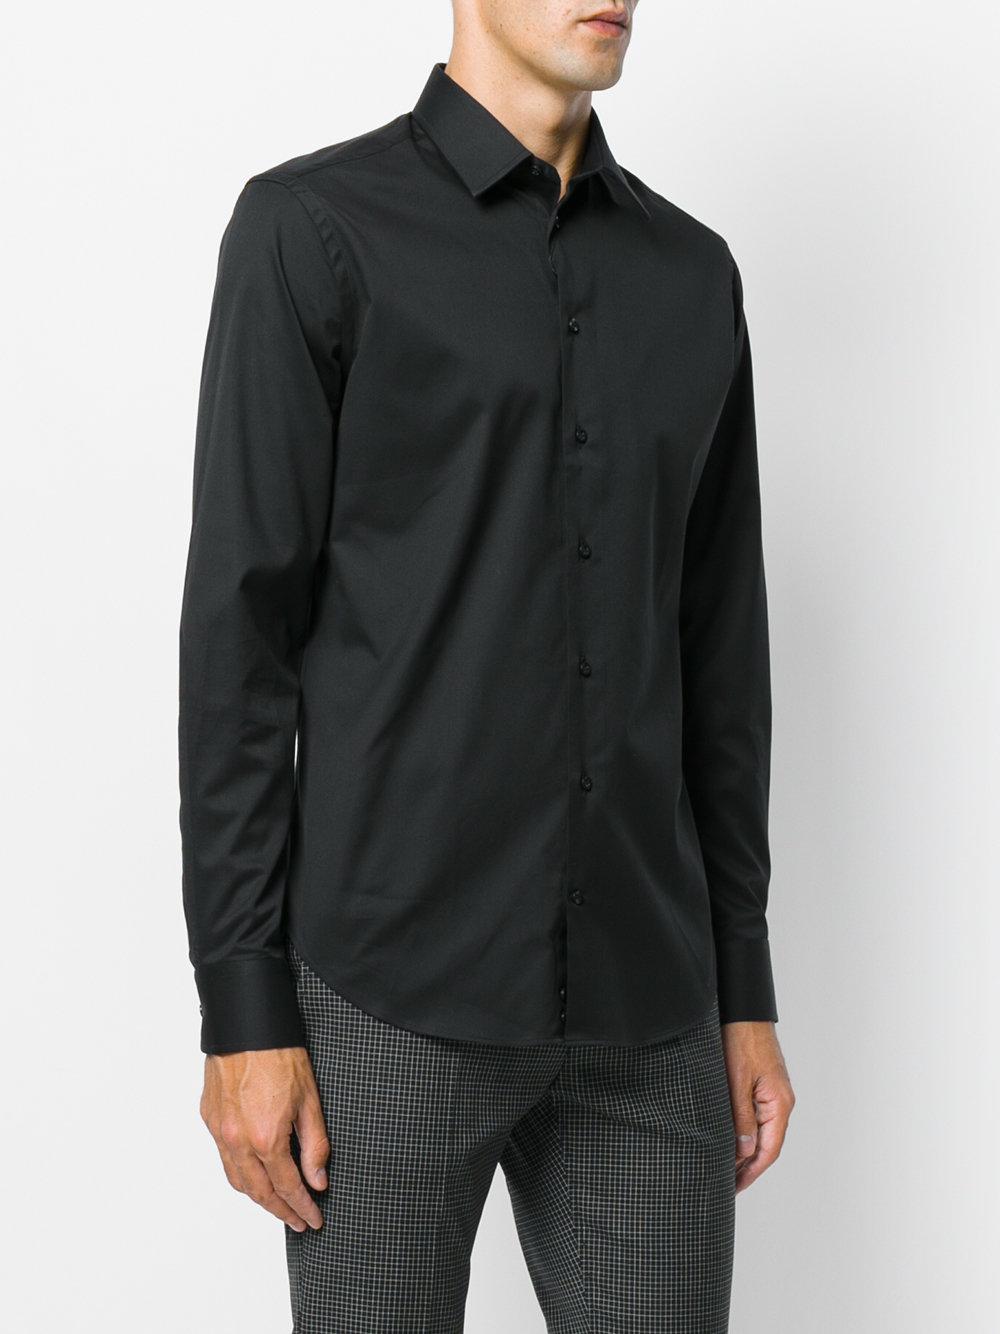 Lyst - Armani Classic Slim Fit Shirt in Black for Men